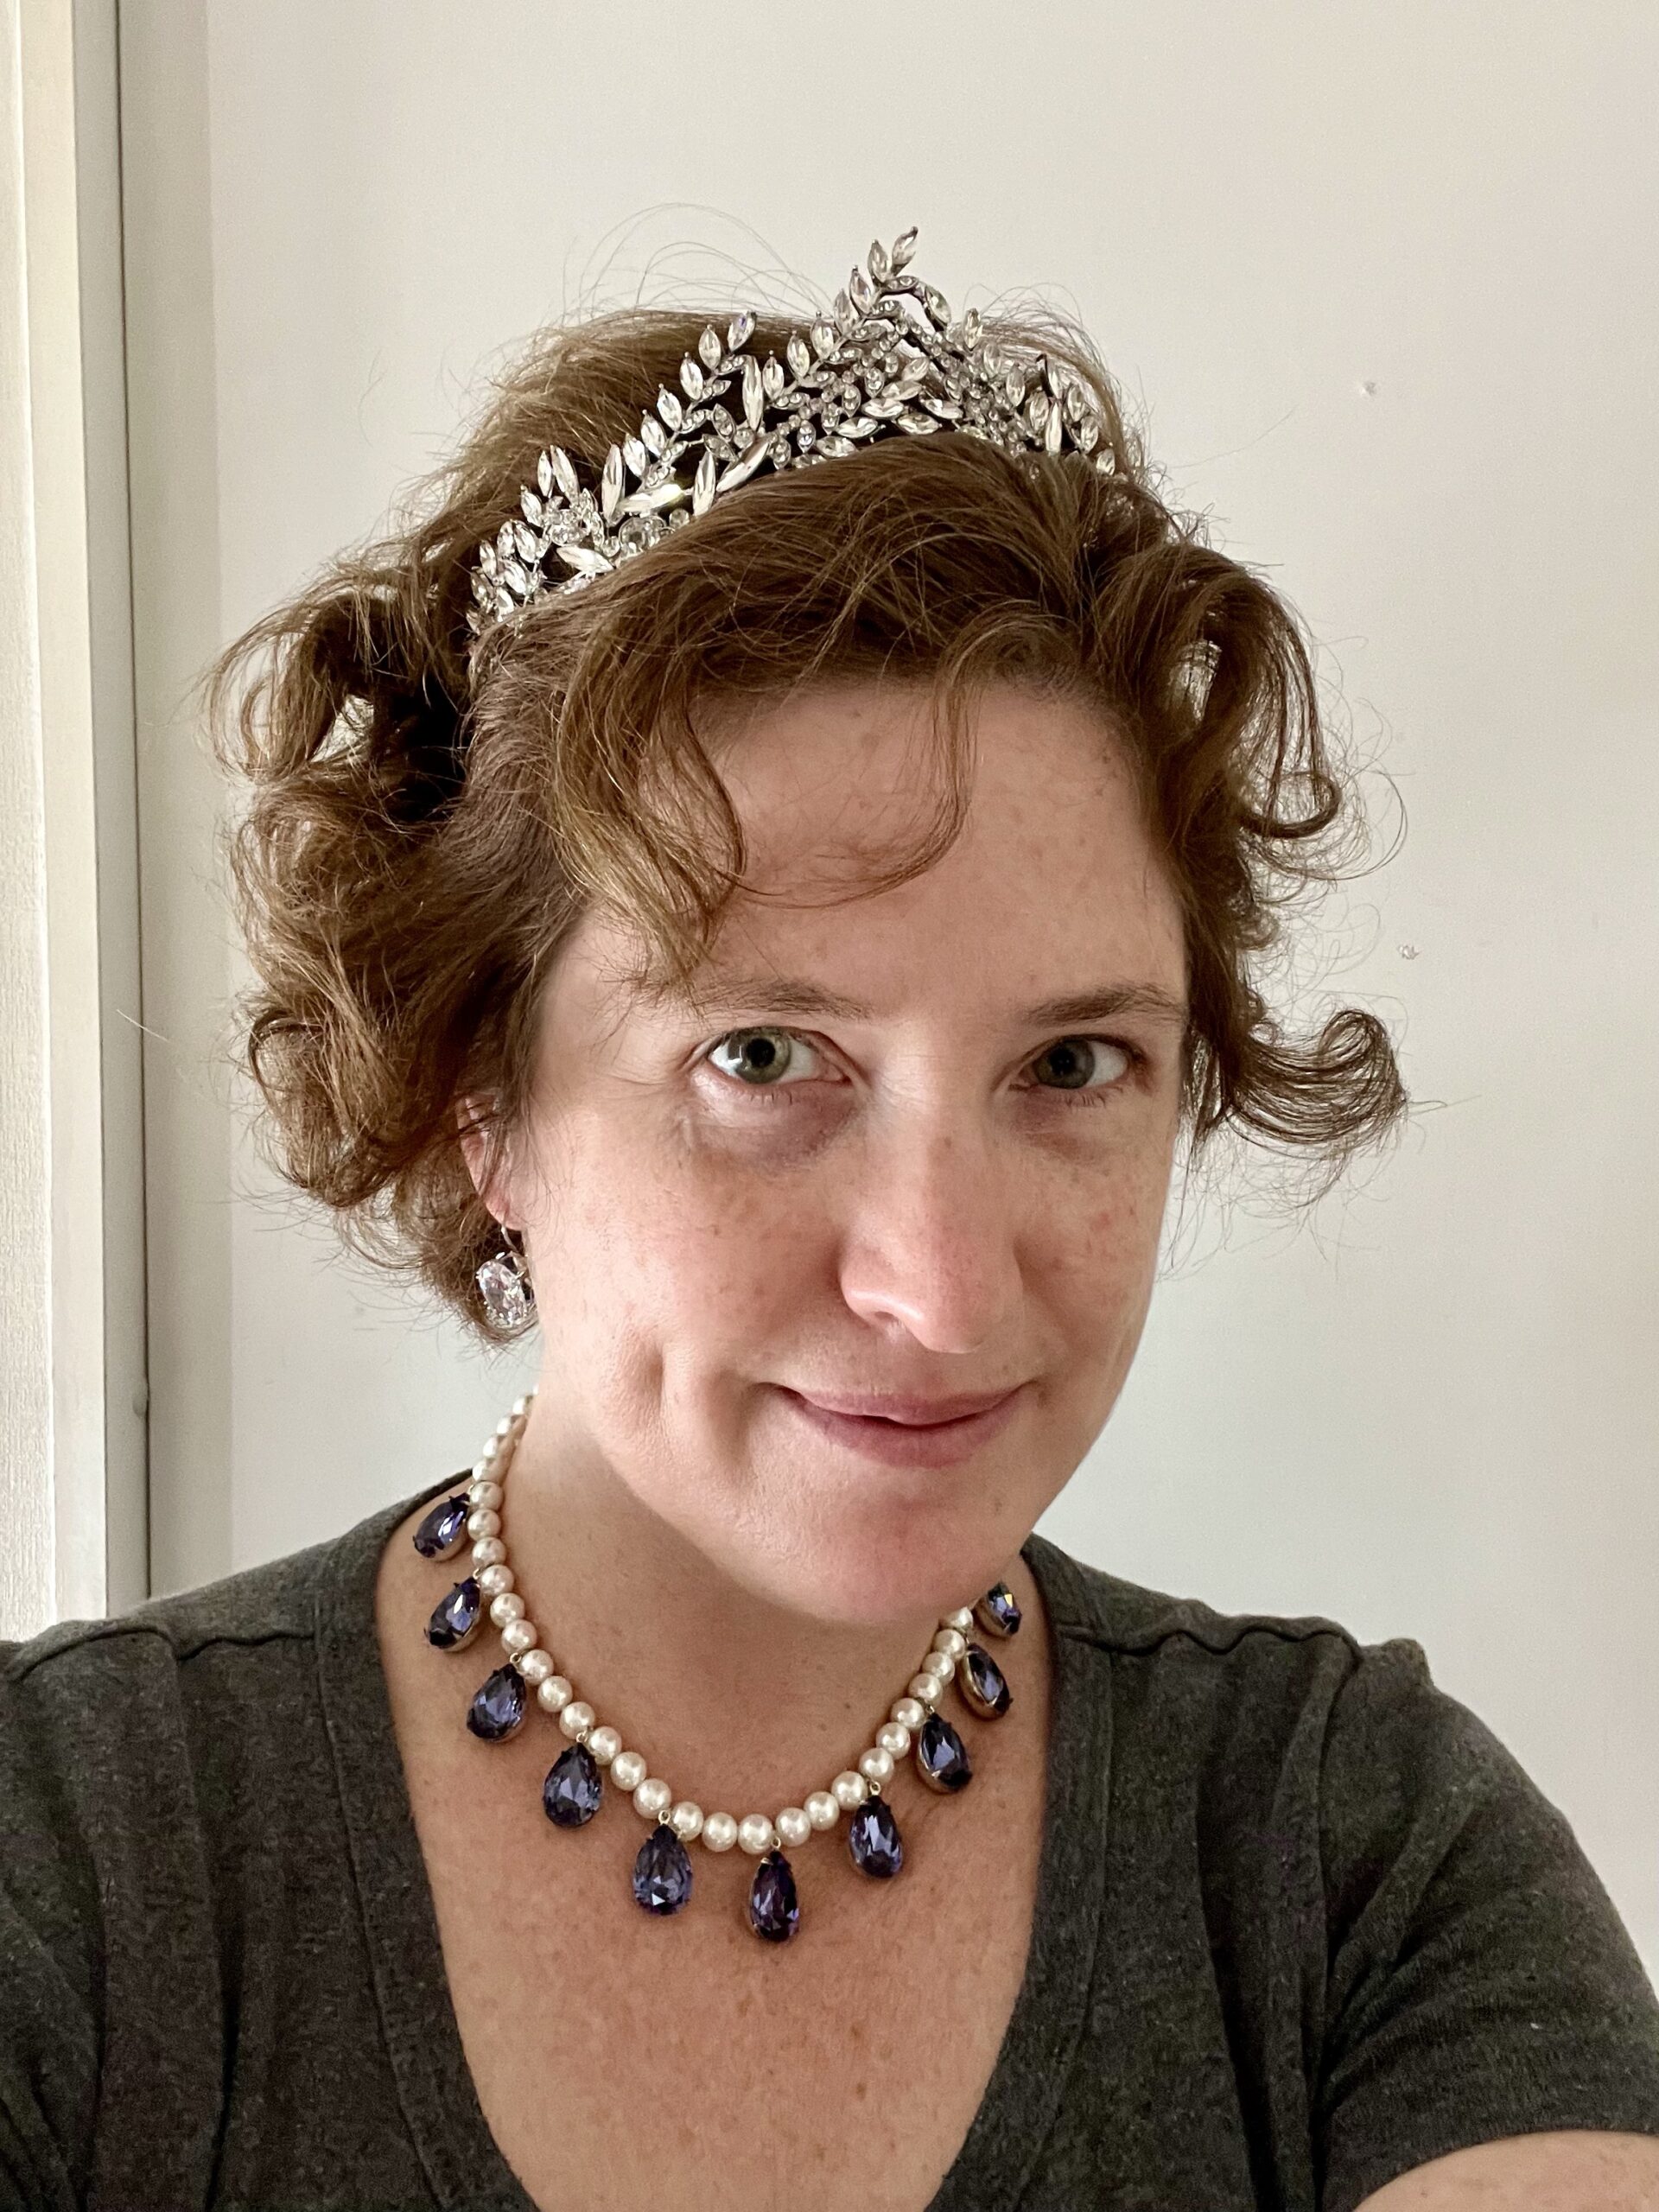 Tabubilgirl faces the camera, wearing a rhinestone wheat-sheaf tiara and a Napoleonic pearl necklace.